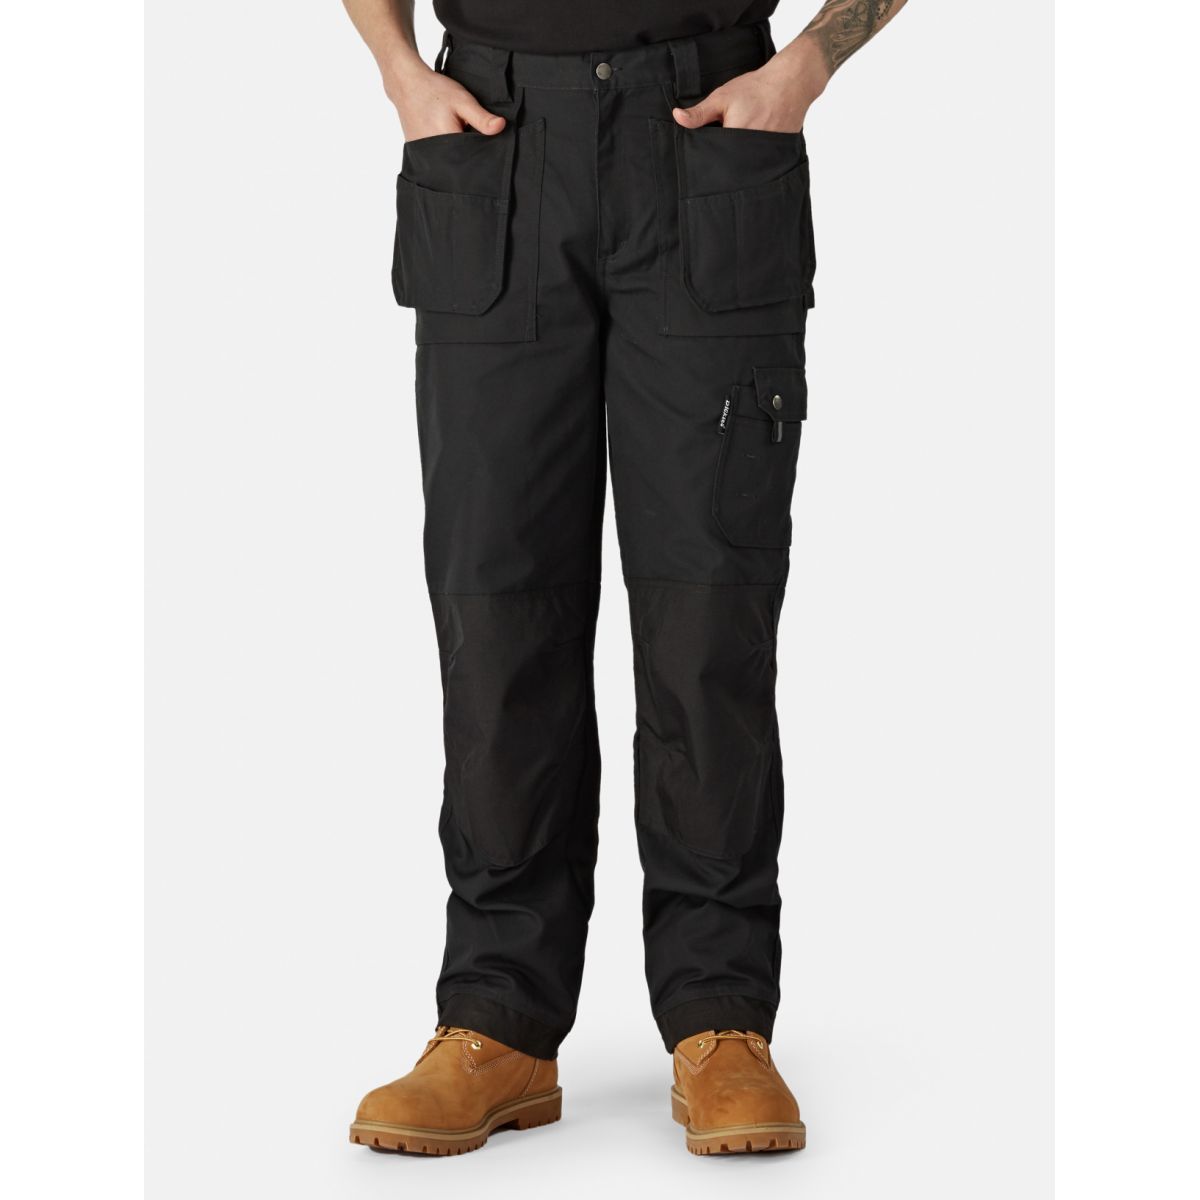 Pantalon Eisenhower multi-poches Noir - Dickies - Taille 46 0